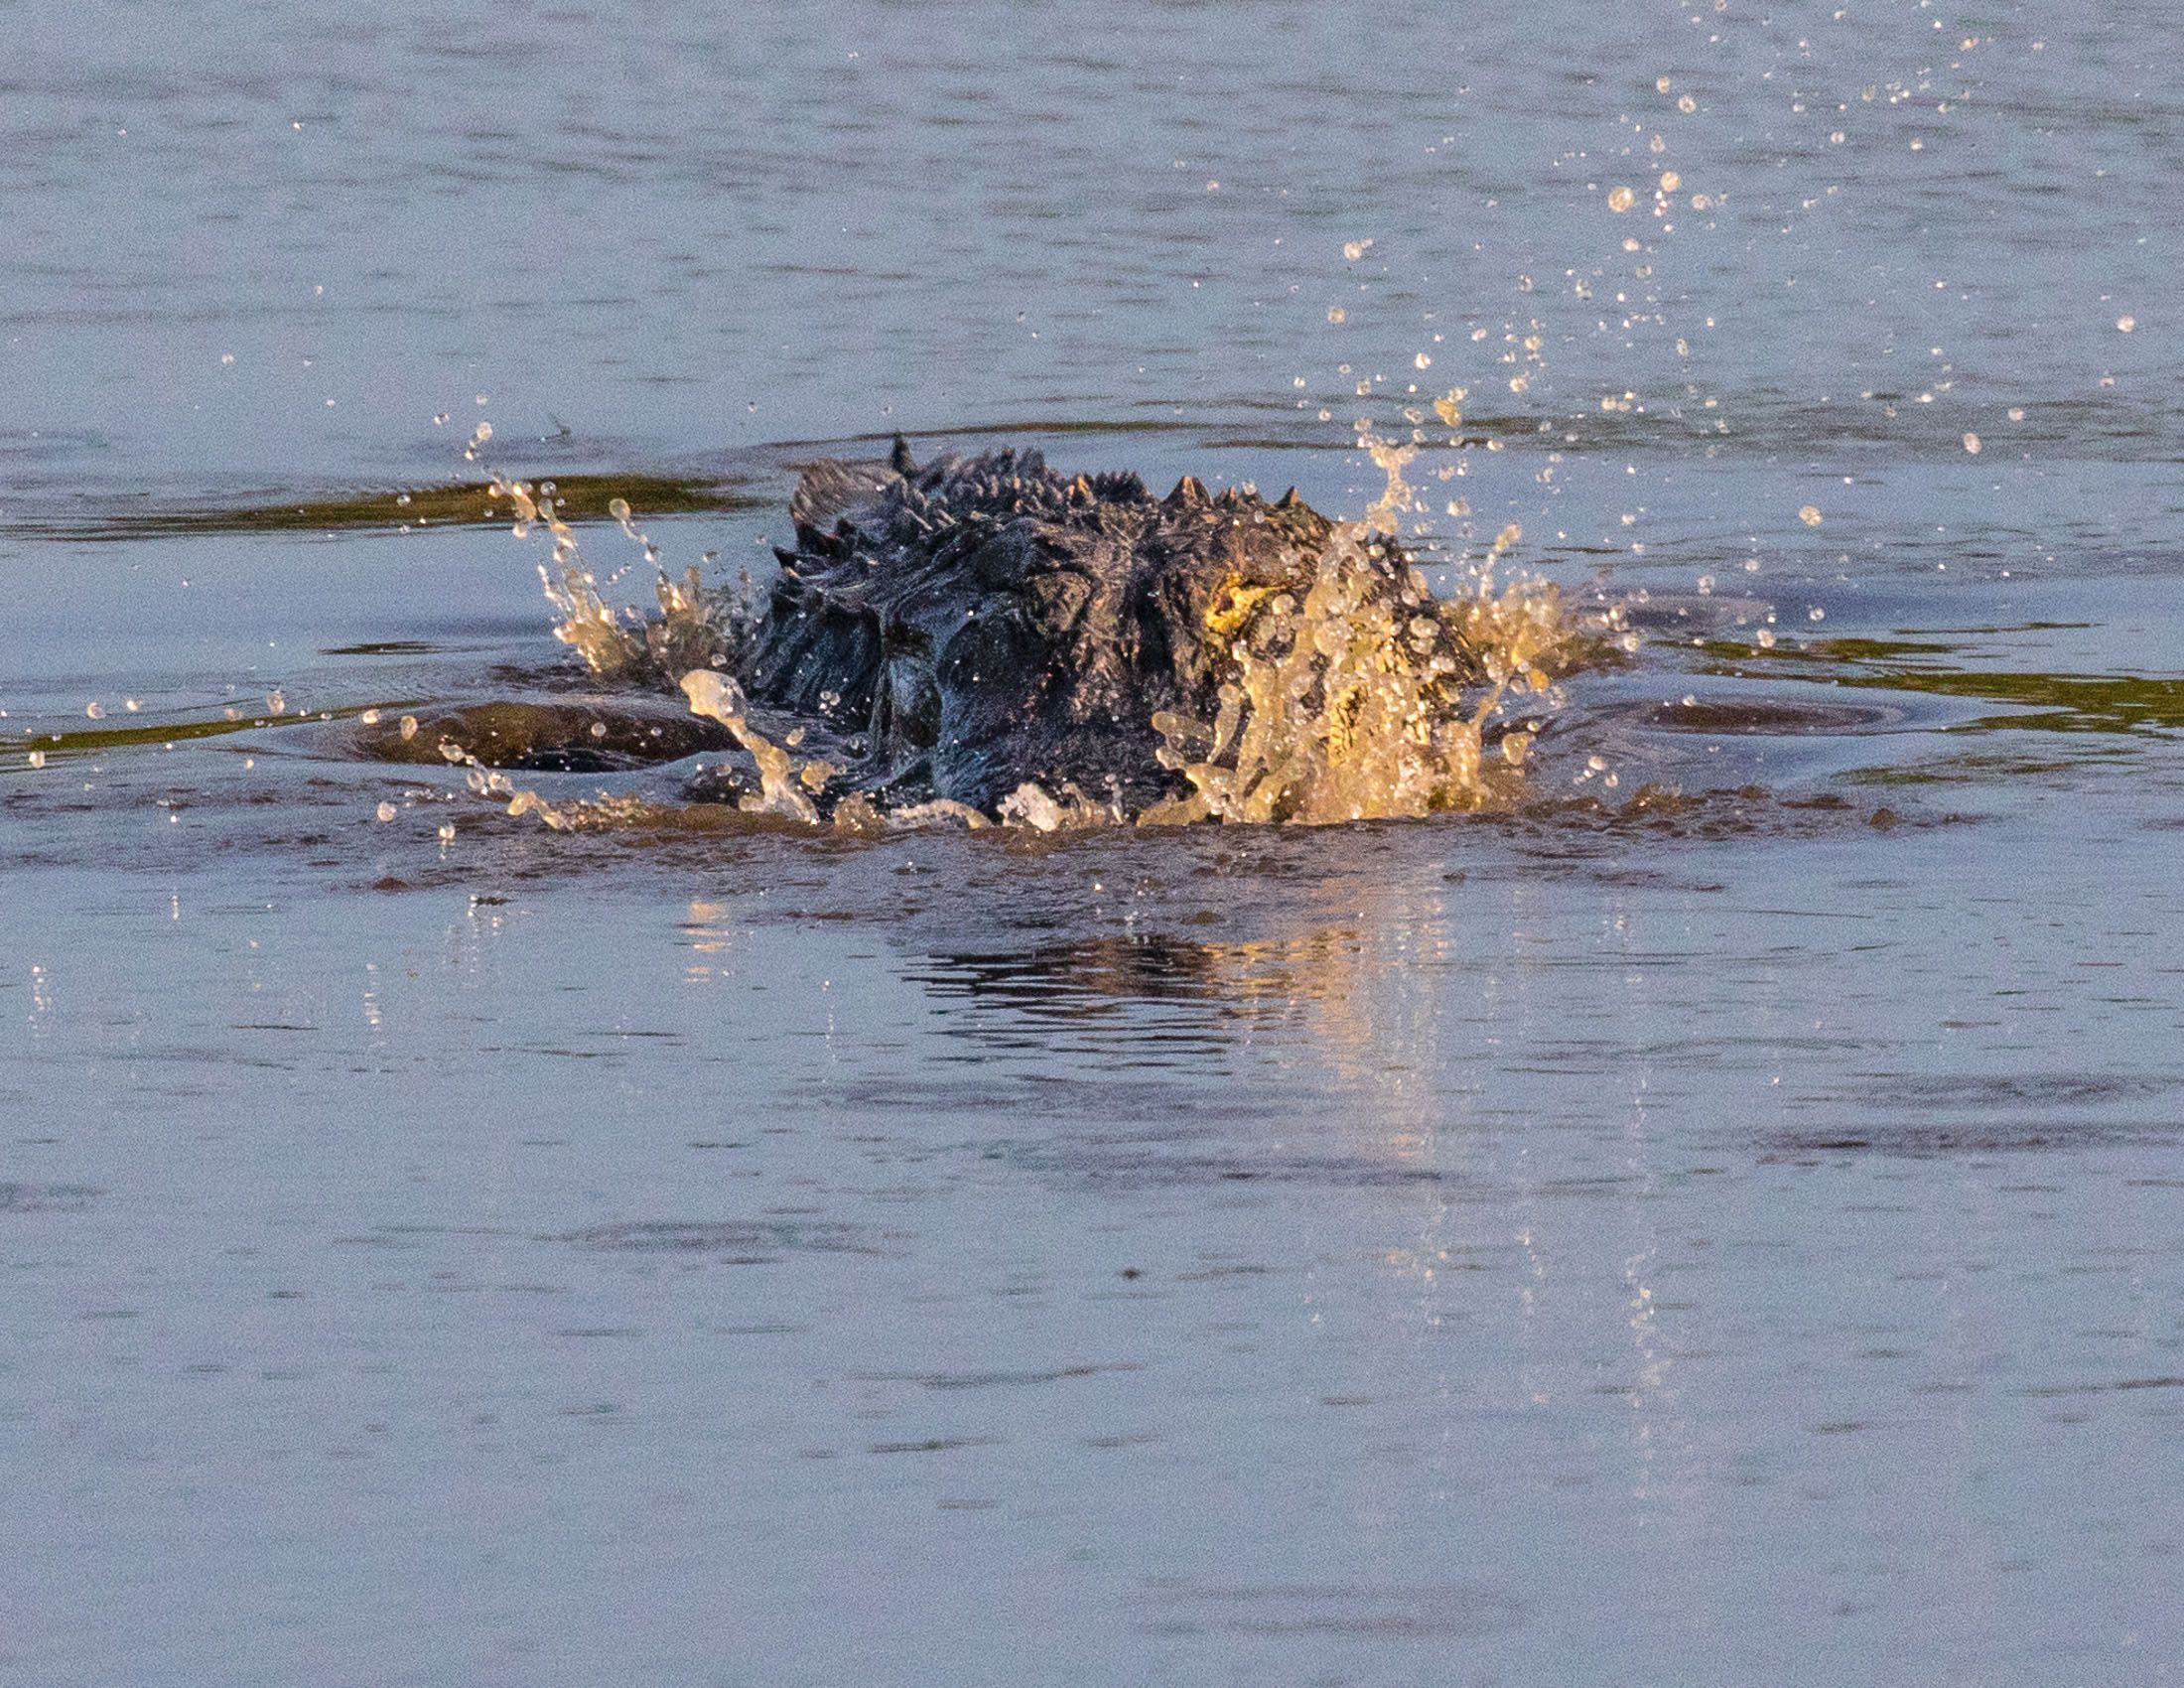 Alligators of Ace Basin, South Carolina-11.jpg